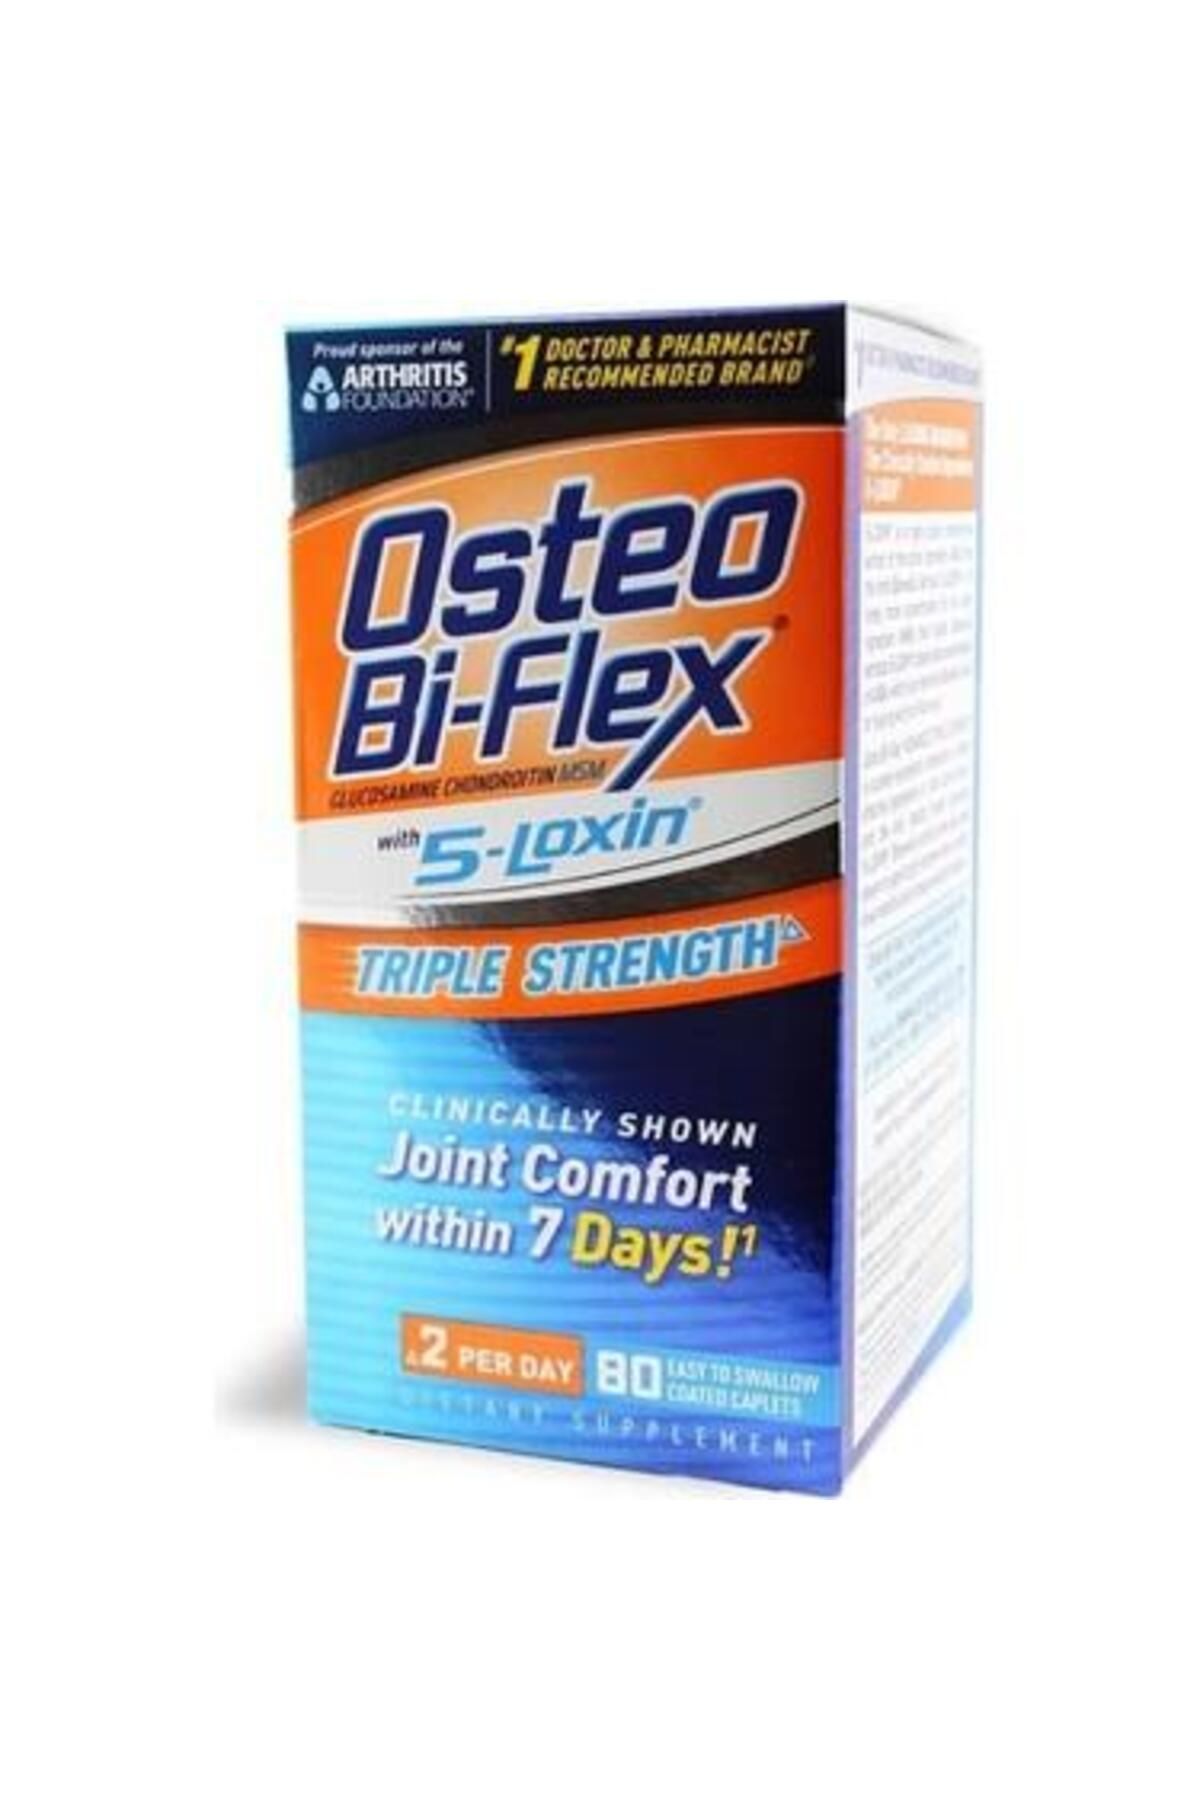 Natures Bounty Osteo Bi-flex 5-loxin Adv 80 Tablet